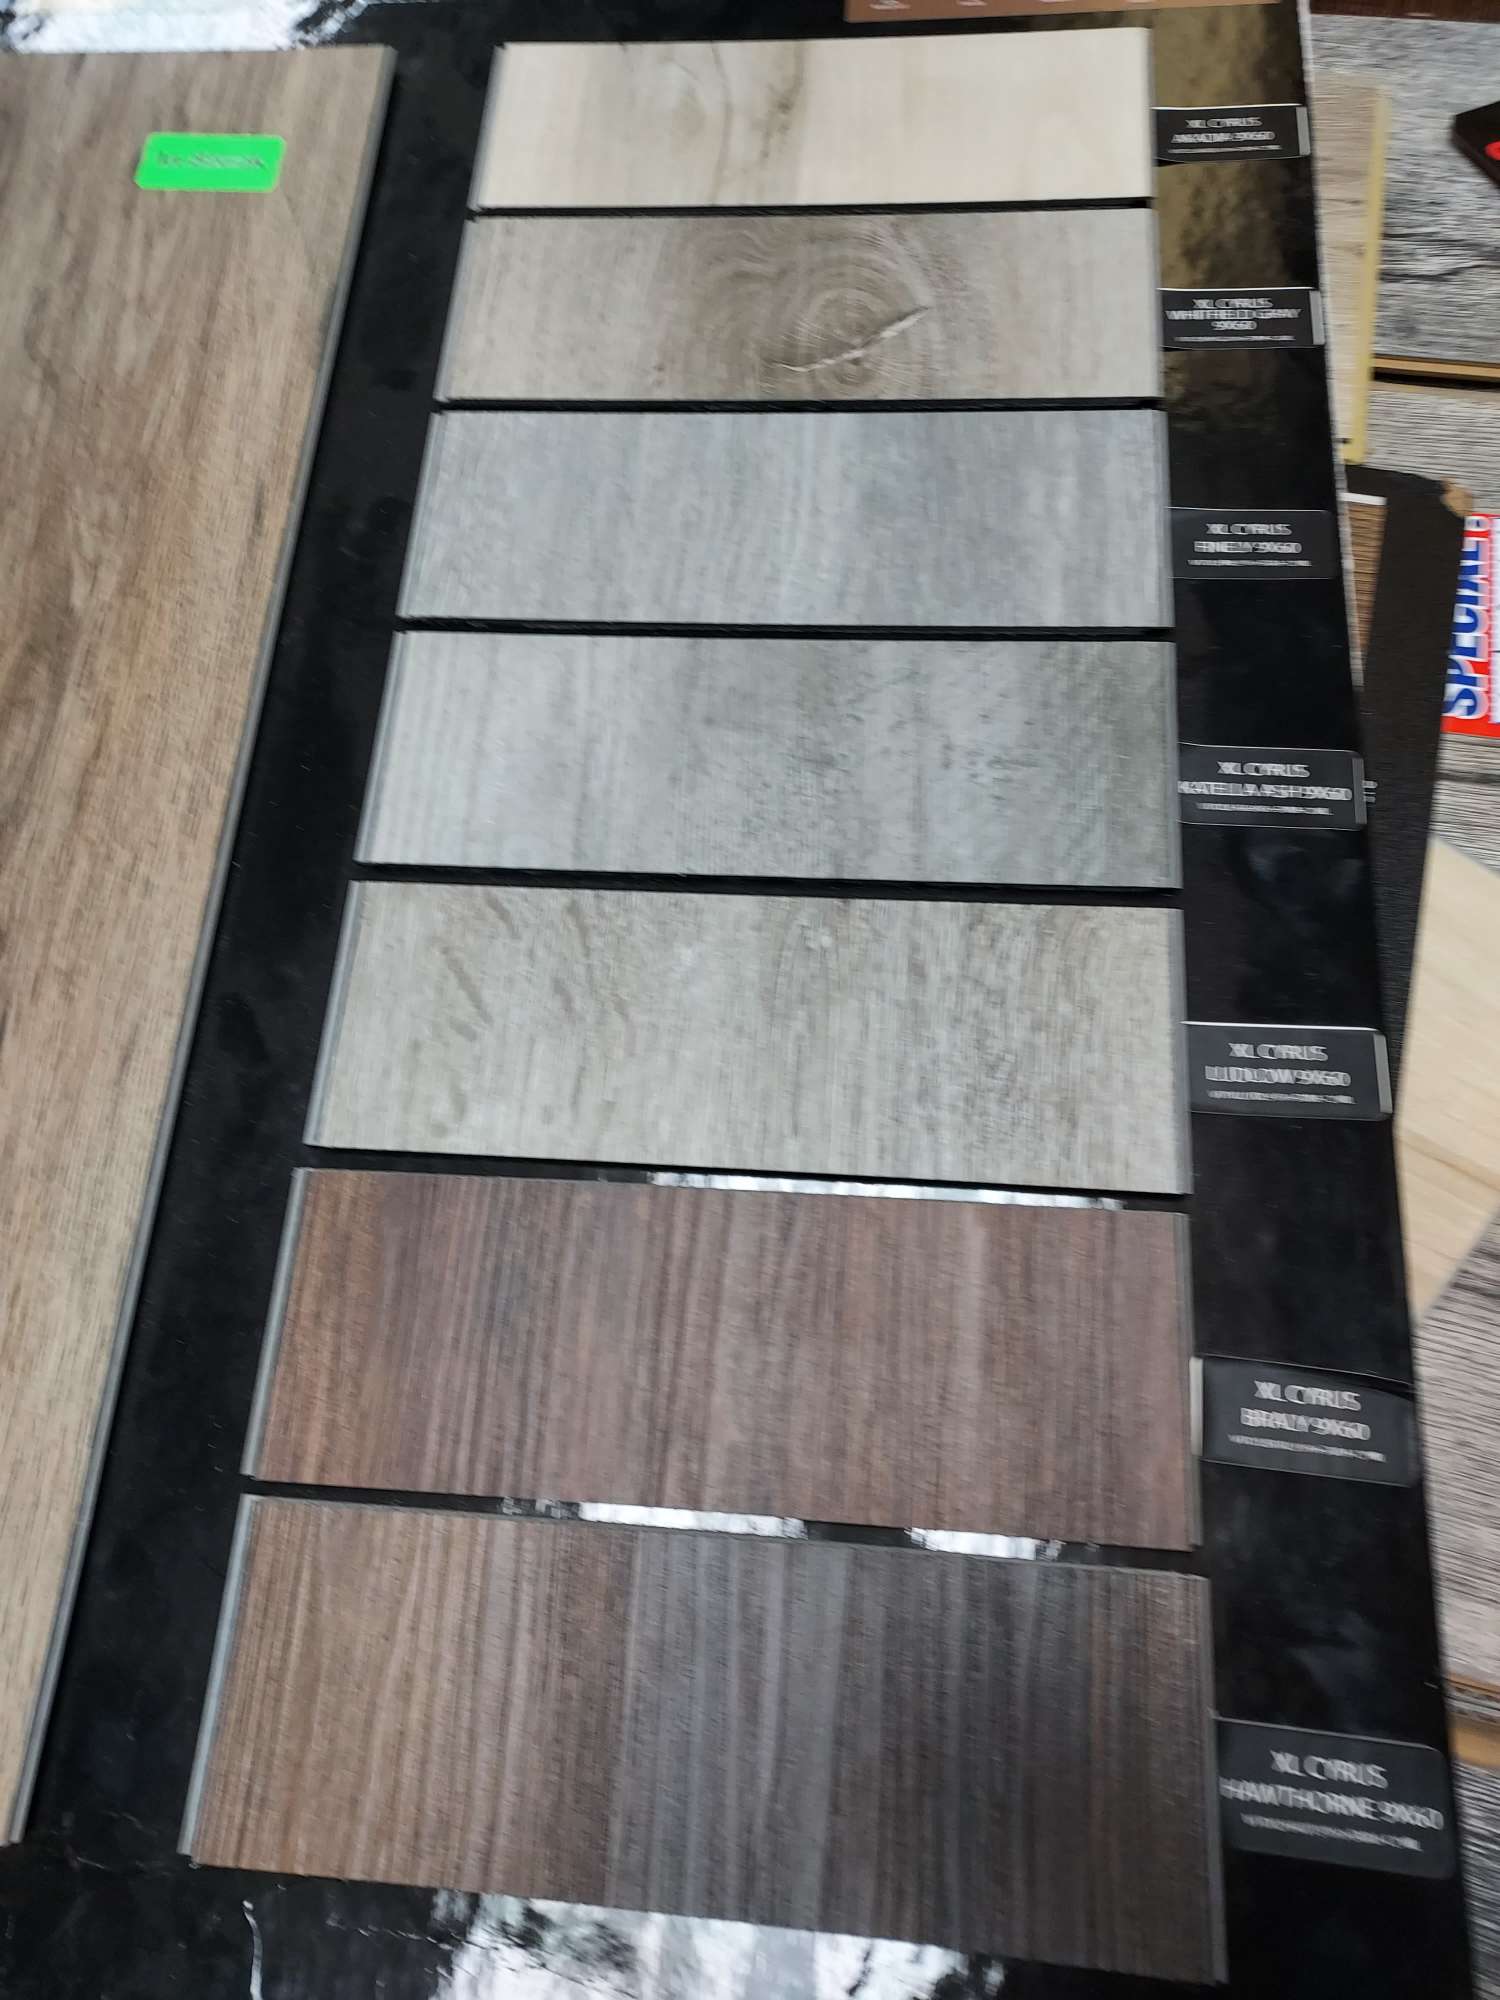 Barrell Luxury Vinyl Planks - Cyrus Vinyl Plank Flooring